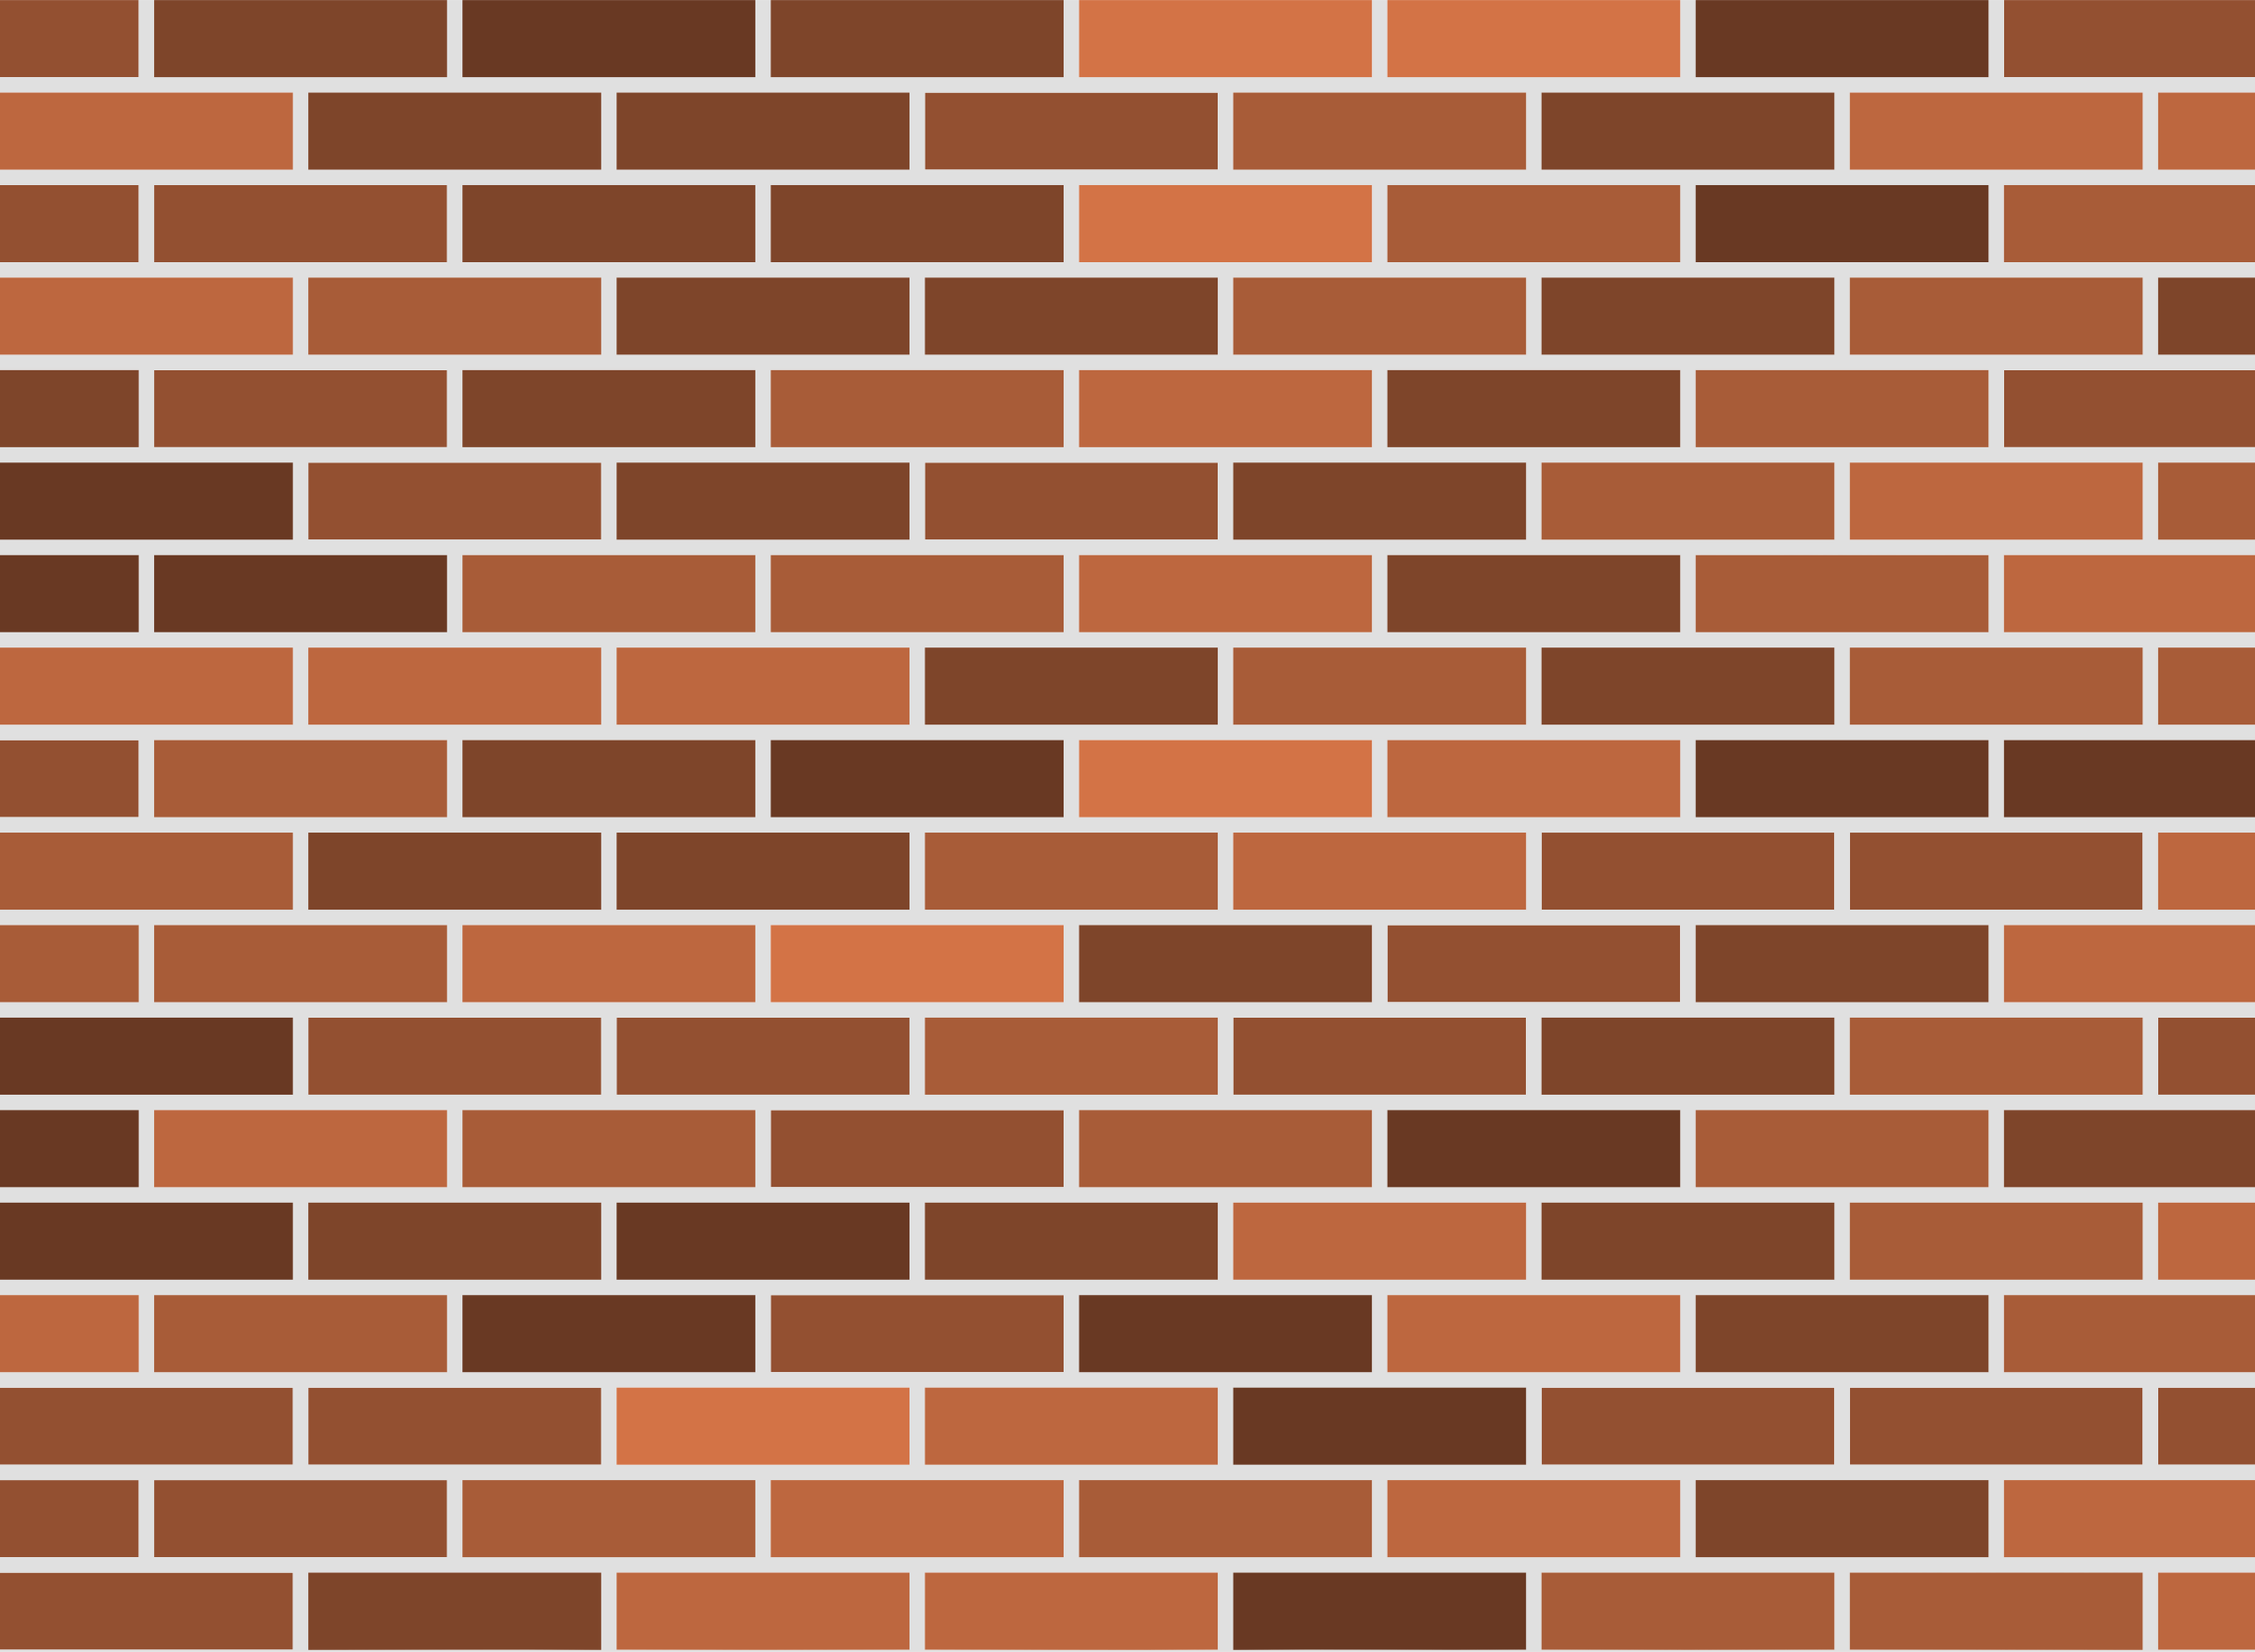 Brick Wall Printable